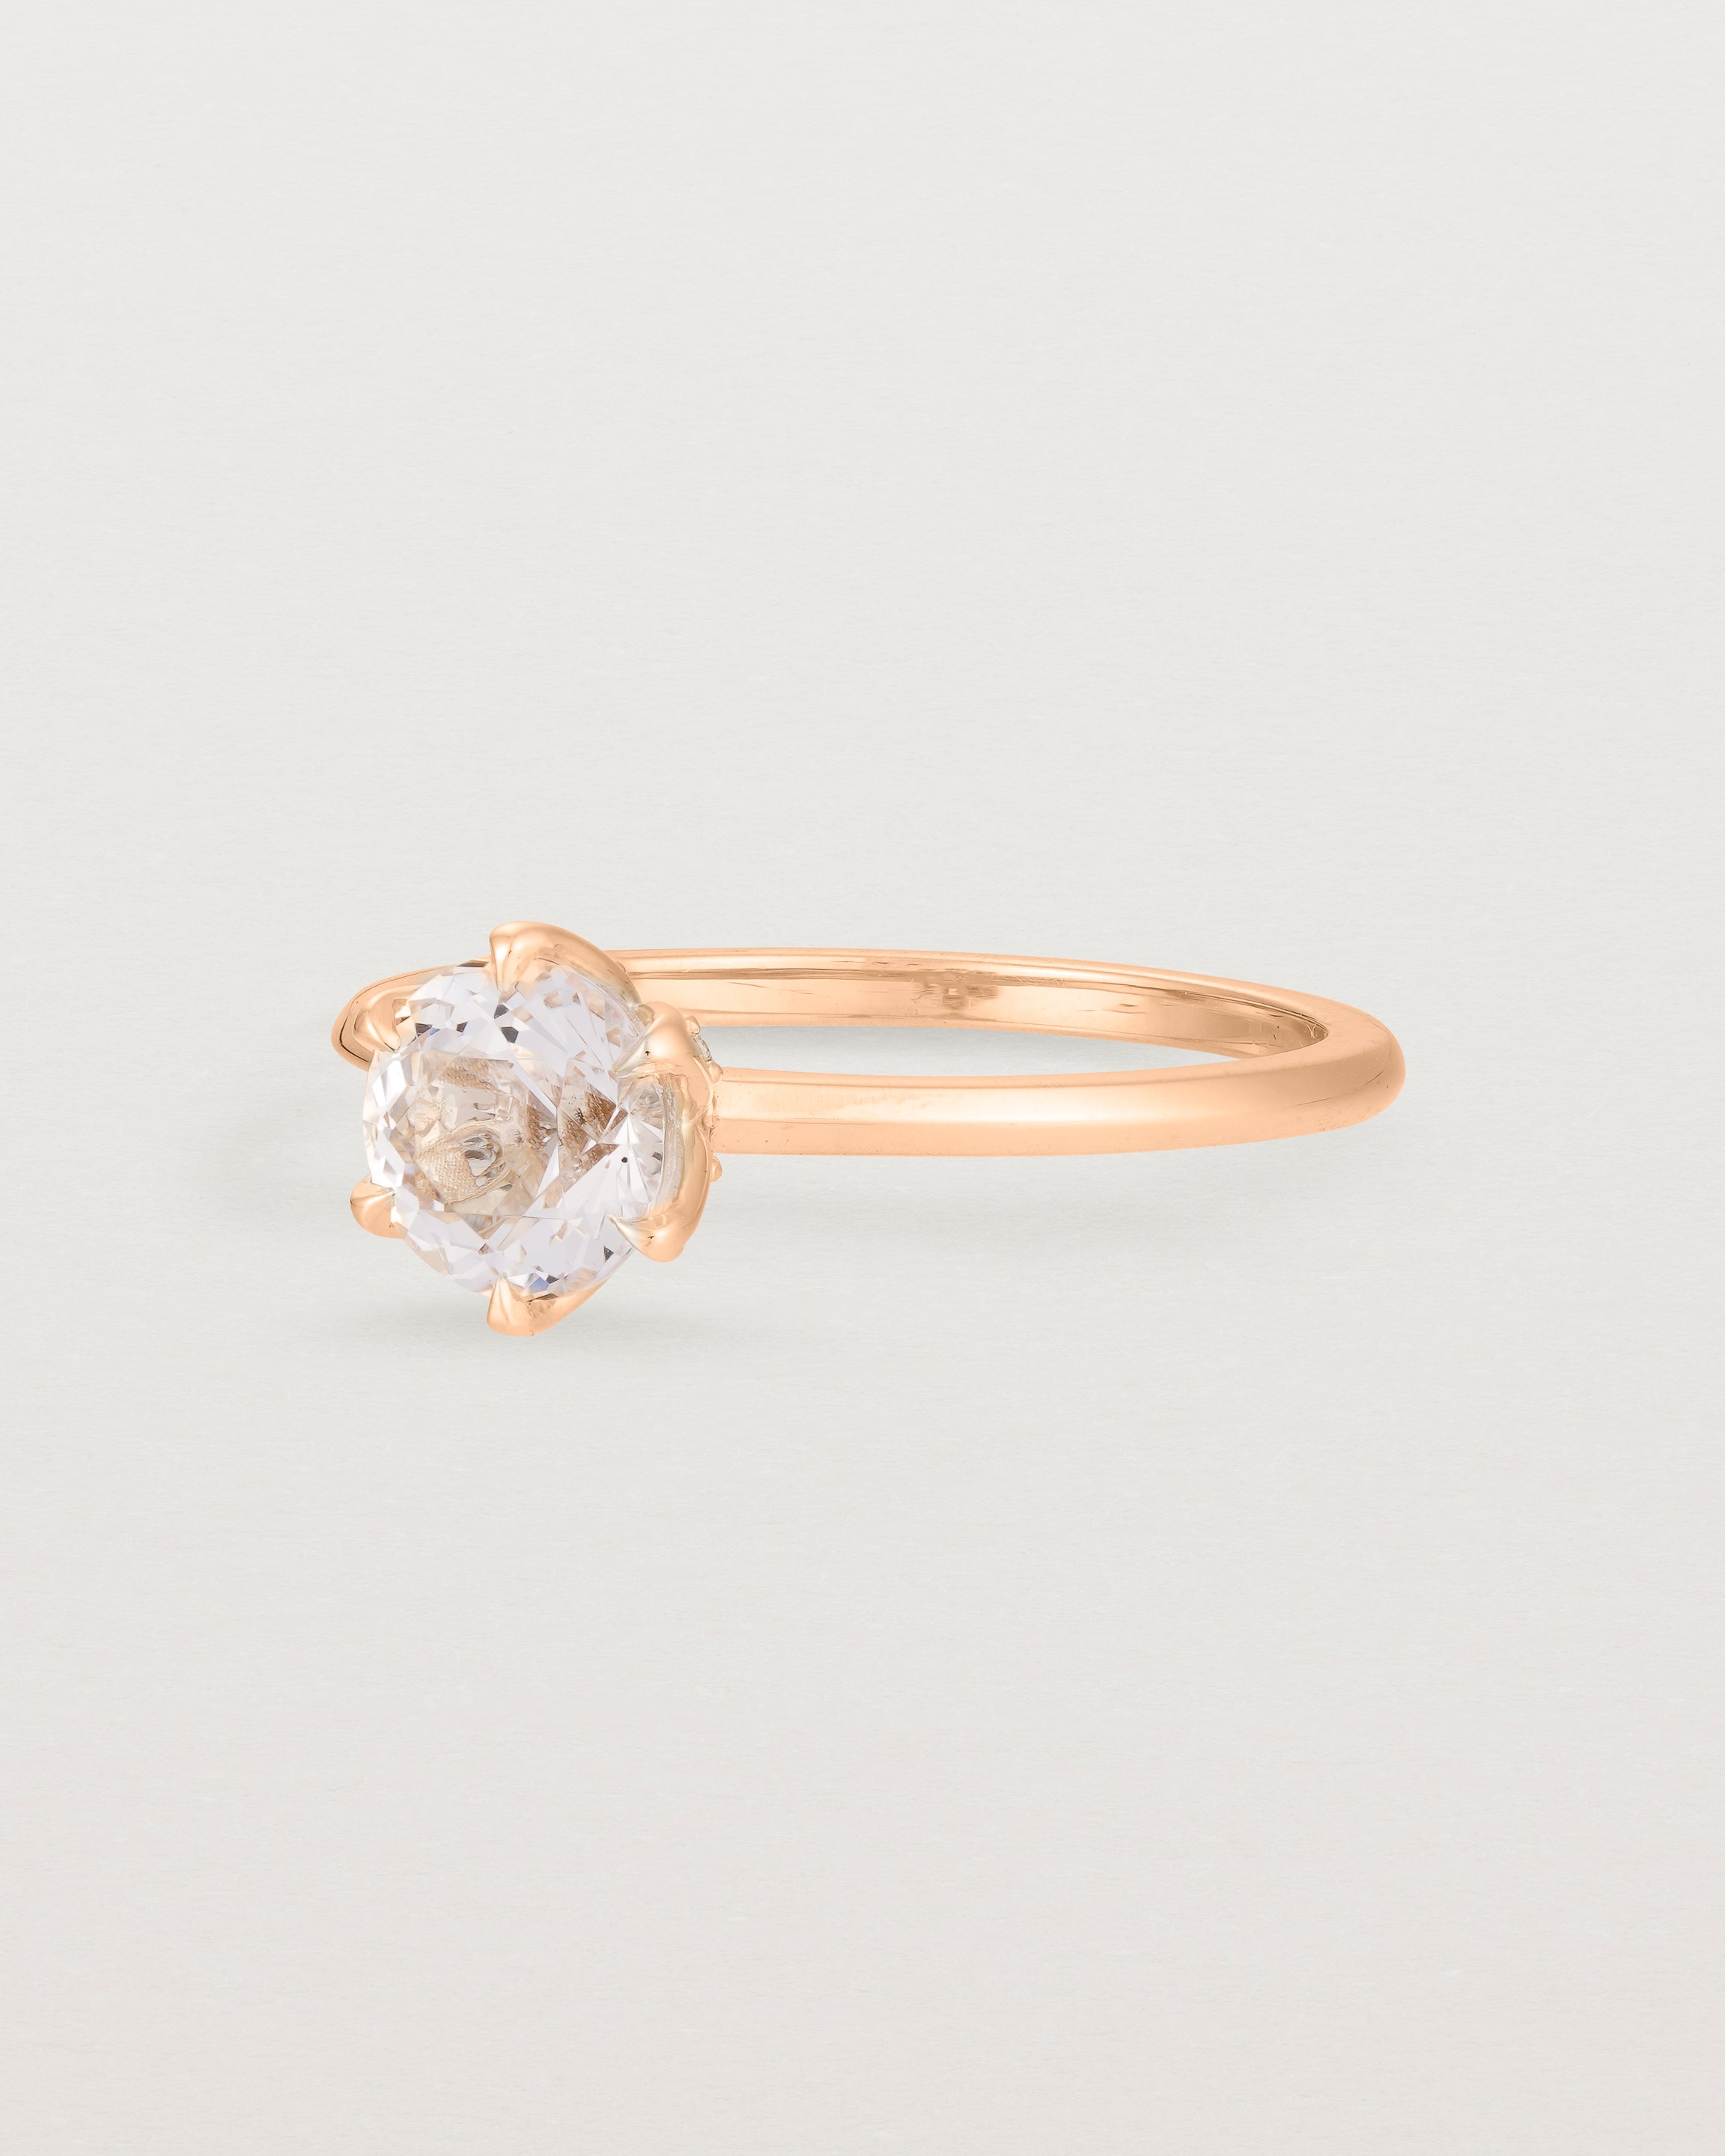 Angled view of the Mandala Solitaire Ring | Morganite & Diamonds | Rose Gold.